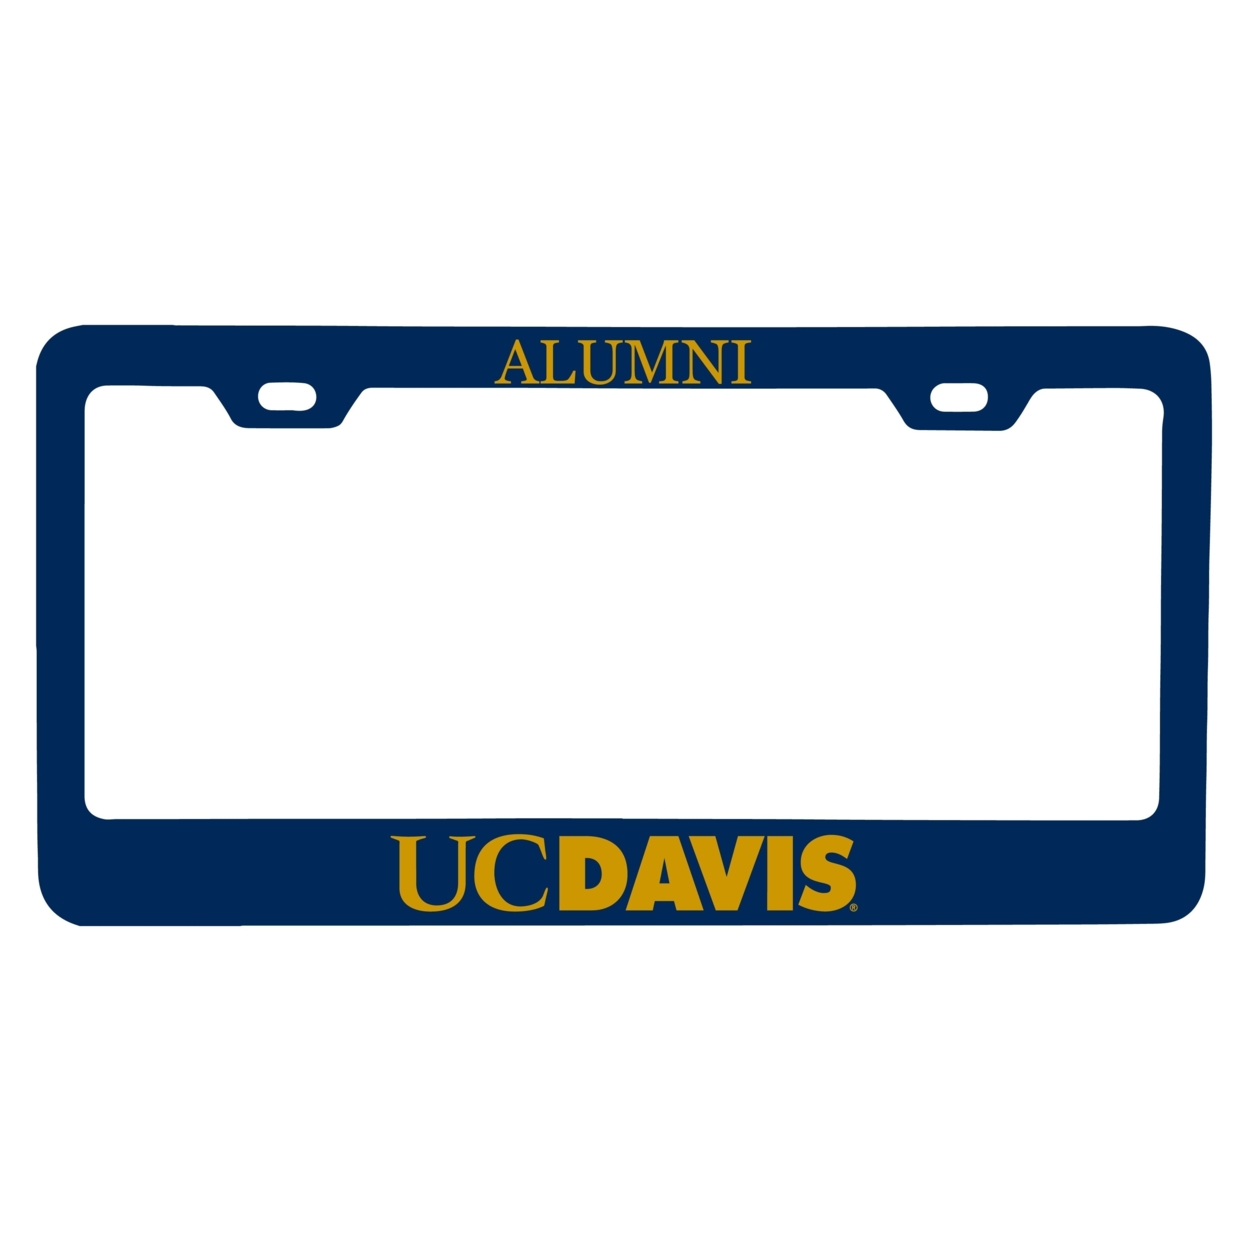 UC Davis Aggies Alumni License Plate Frame New For 2020